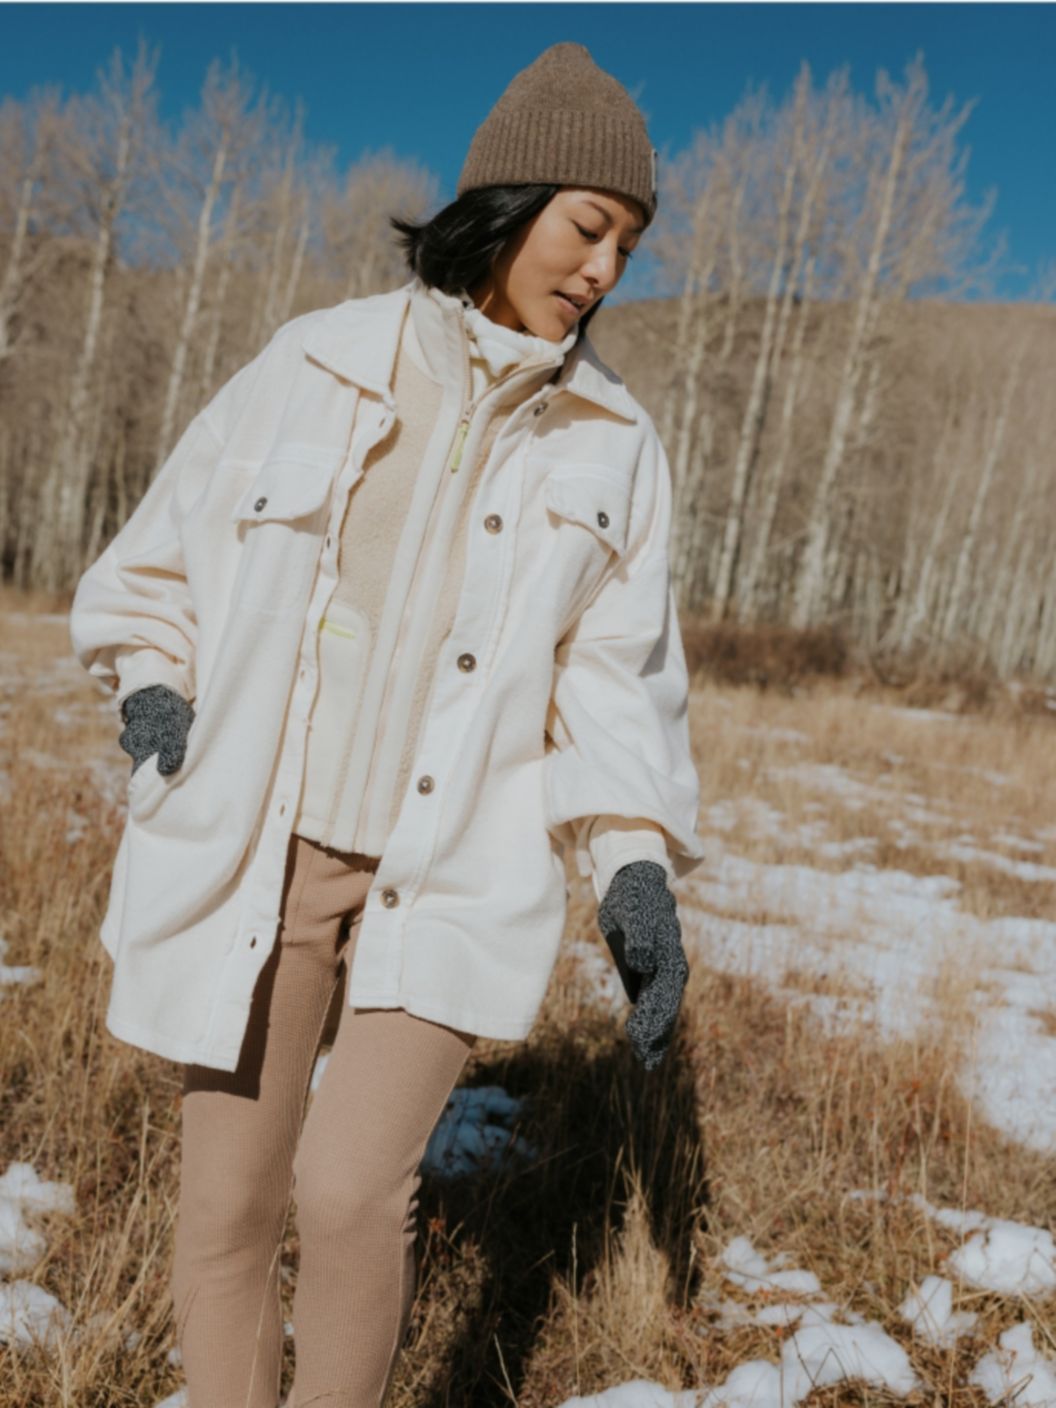   A woman walking in a snowy field wears a monochrome layered outfit, including leggings, fleece sweater, felt coat, and knit hat. 